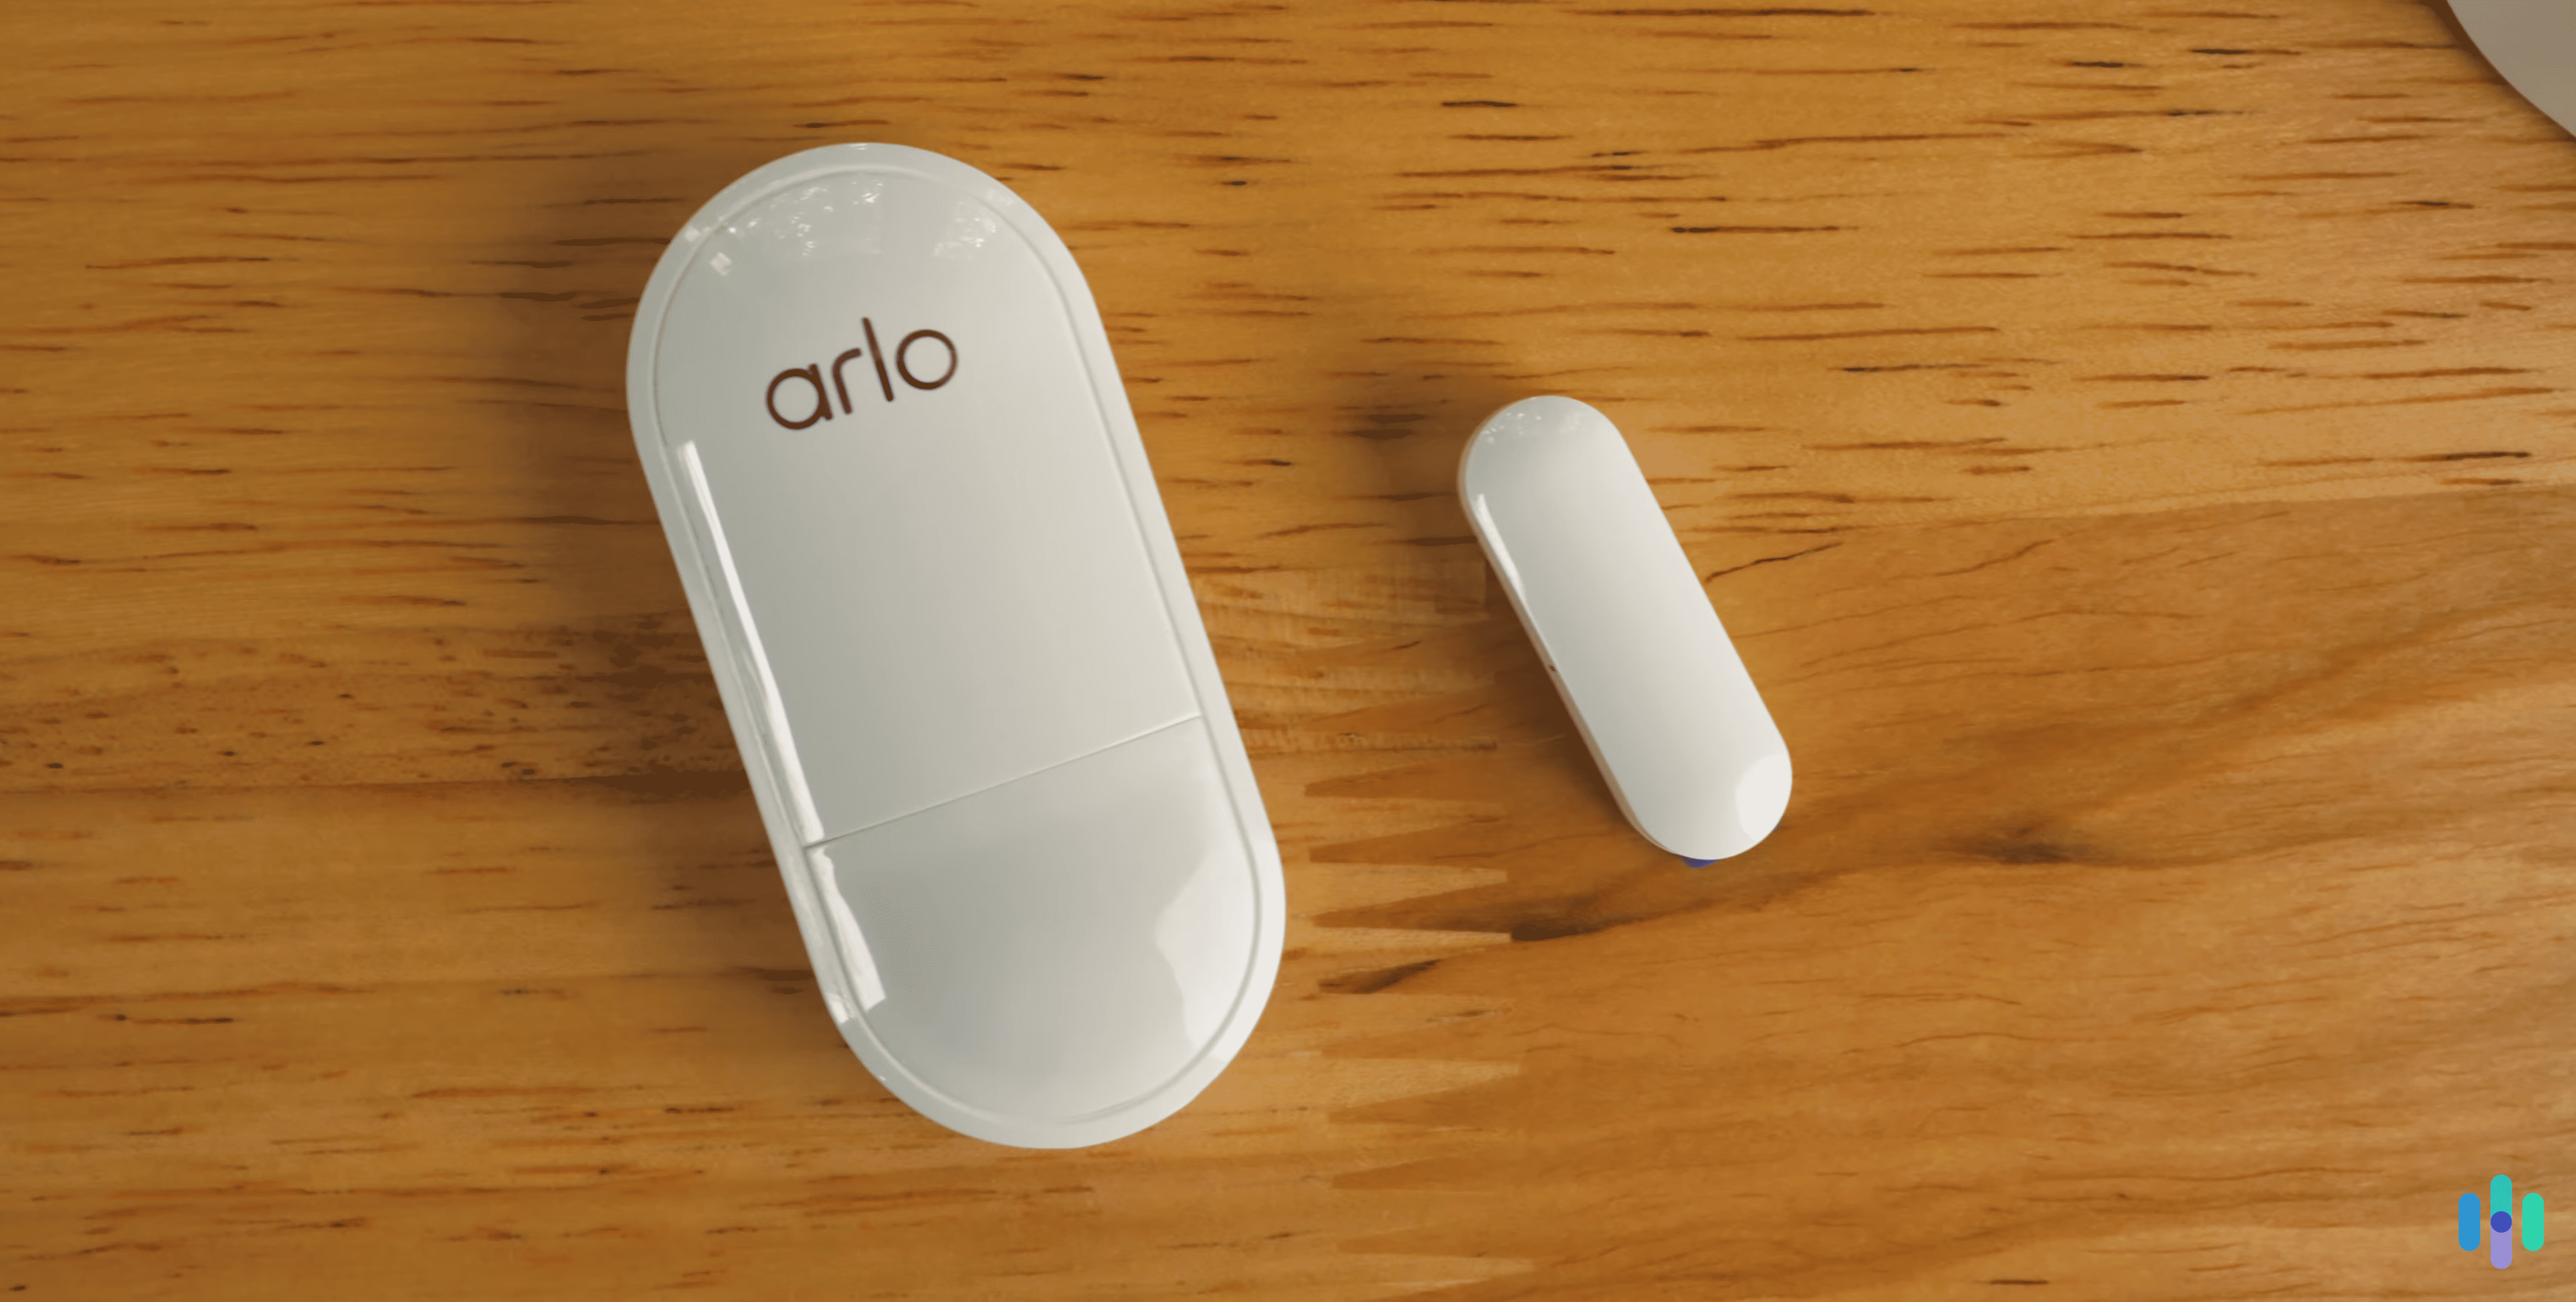 Arlo's All-In-One Sensor